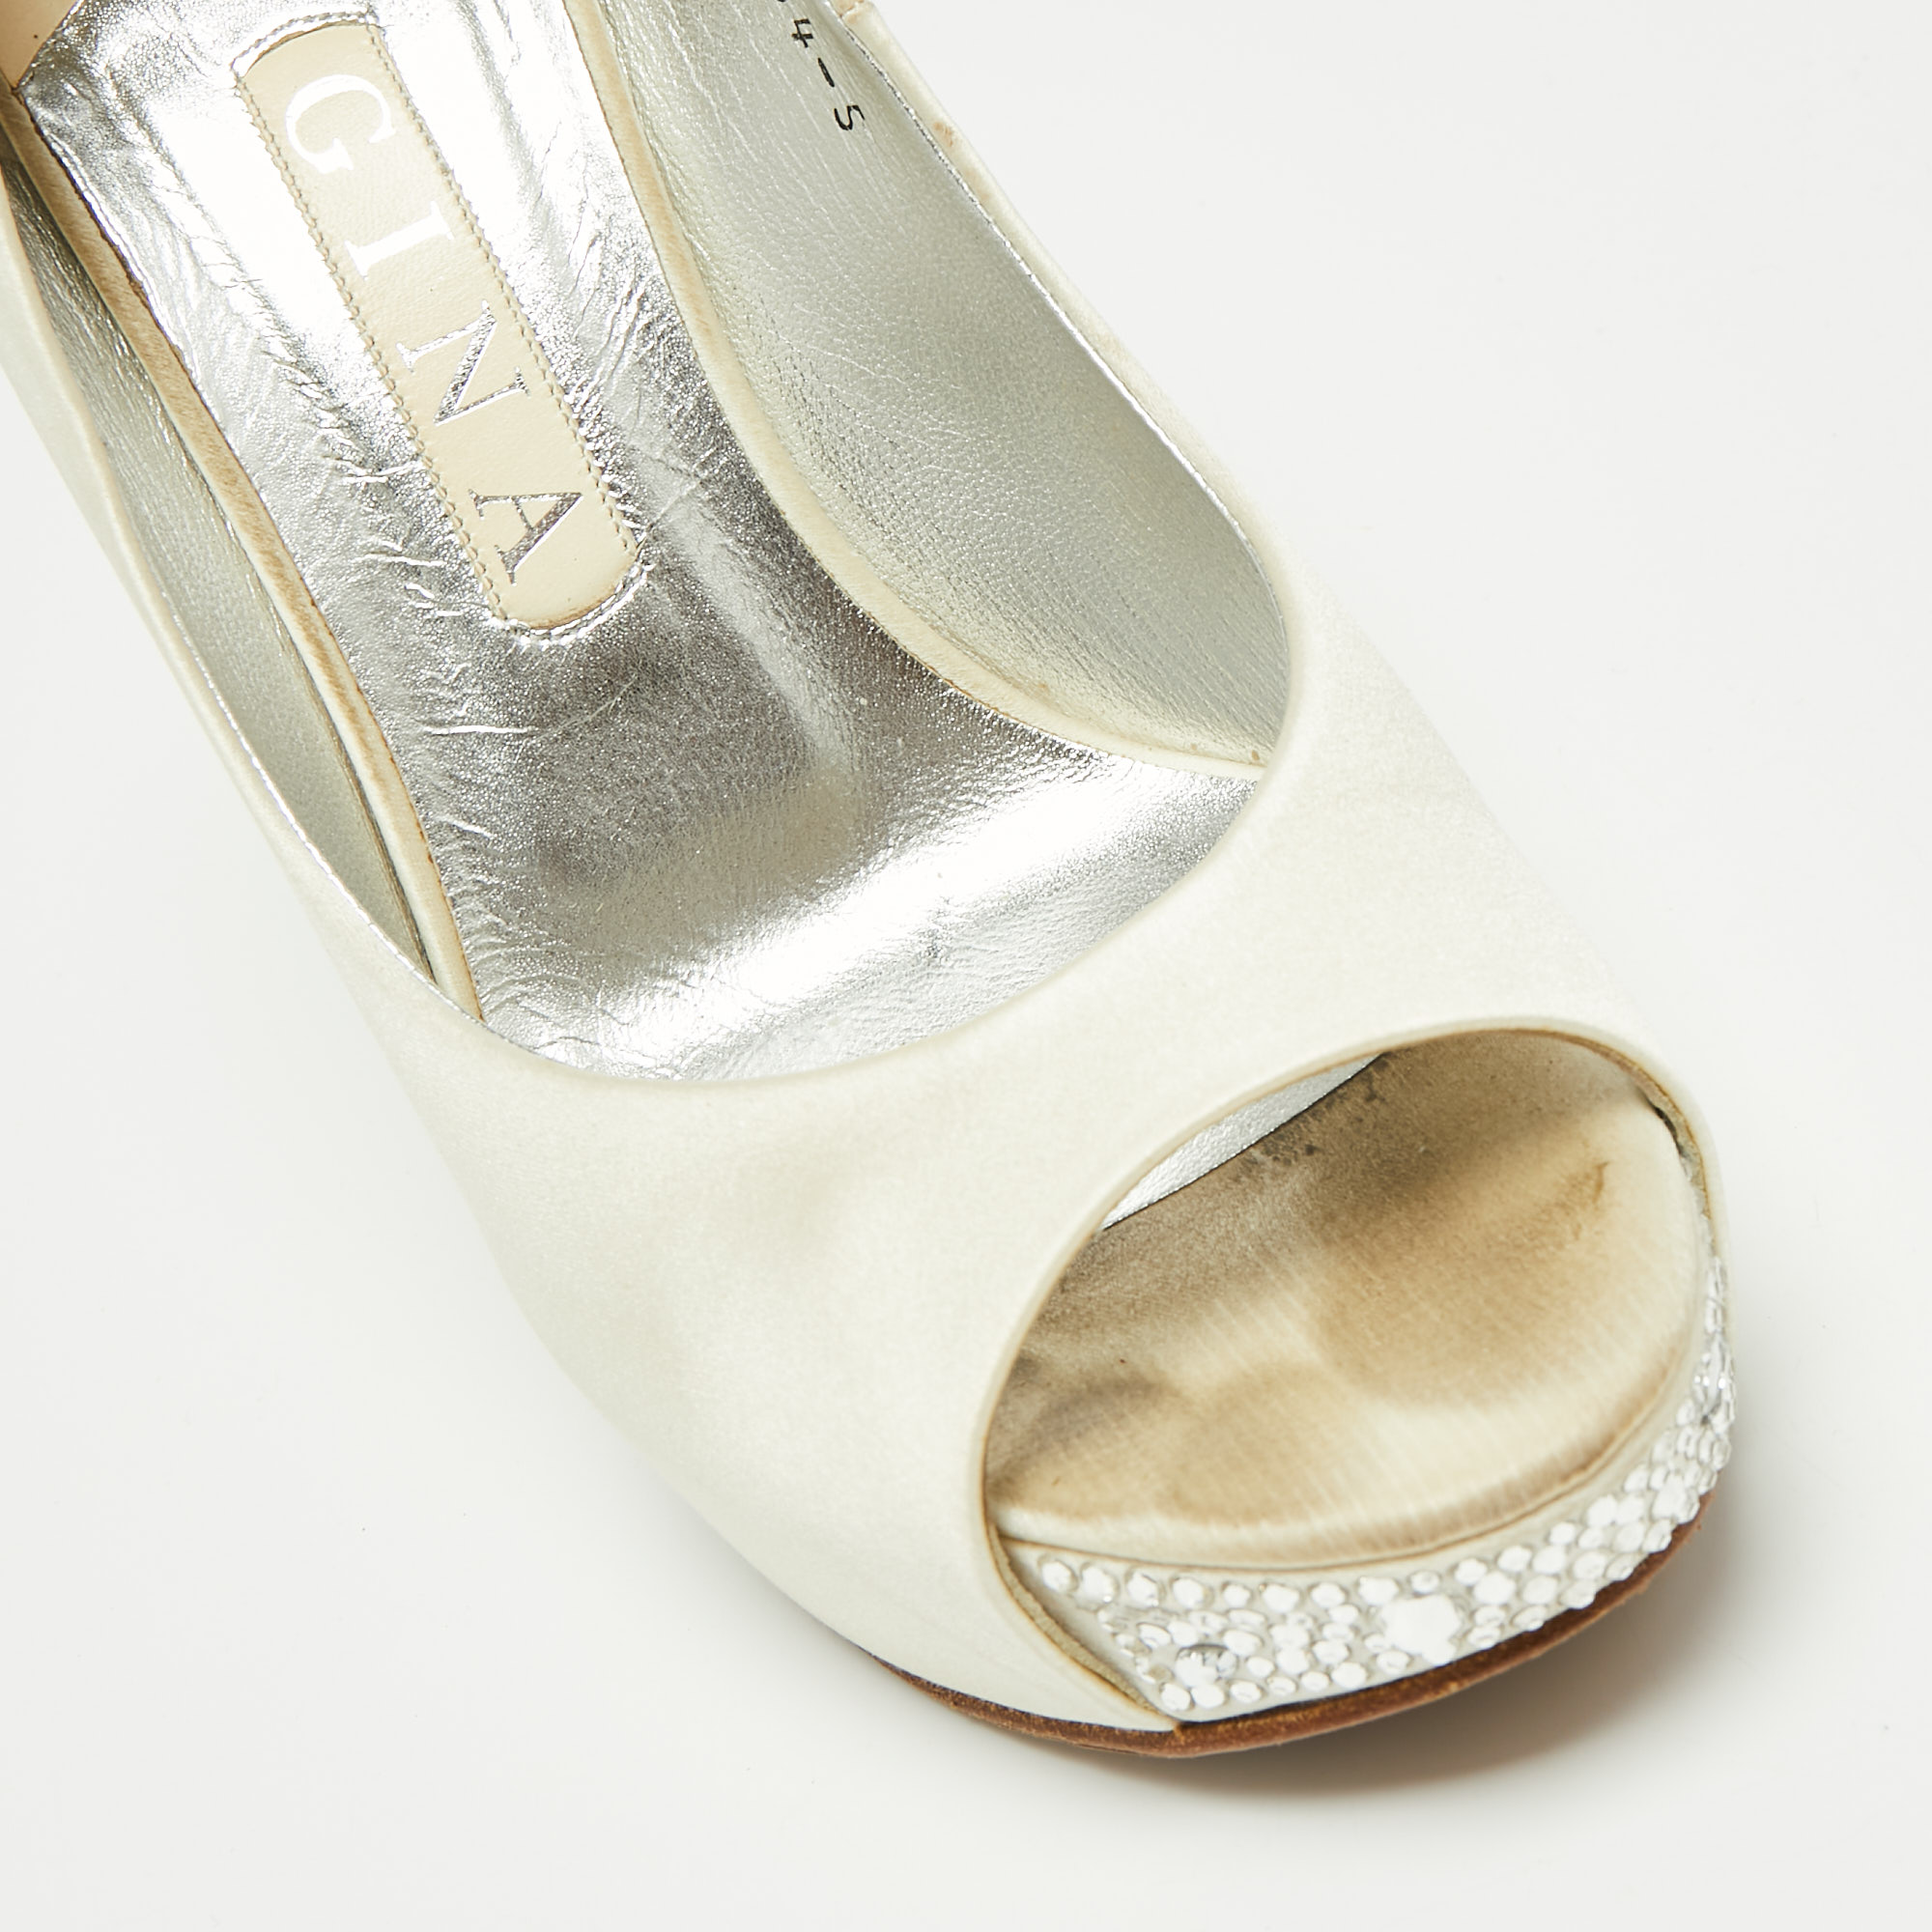 Gina White Satin Jenna Crystal Embellished Heel Peep Toe Platform Pumps Size 38